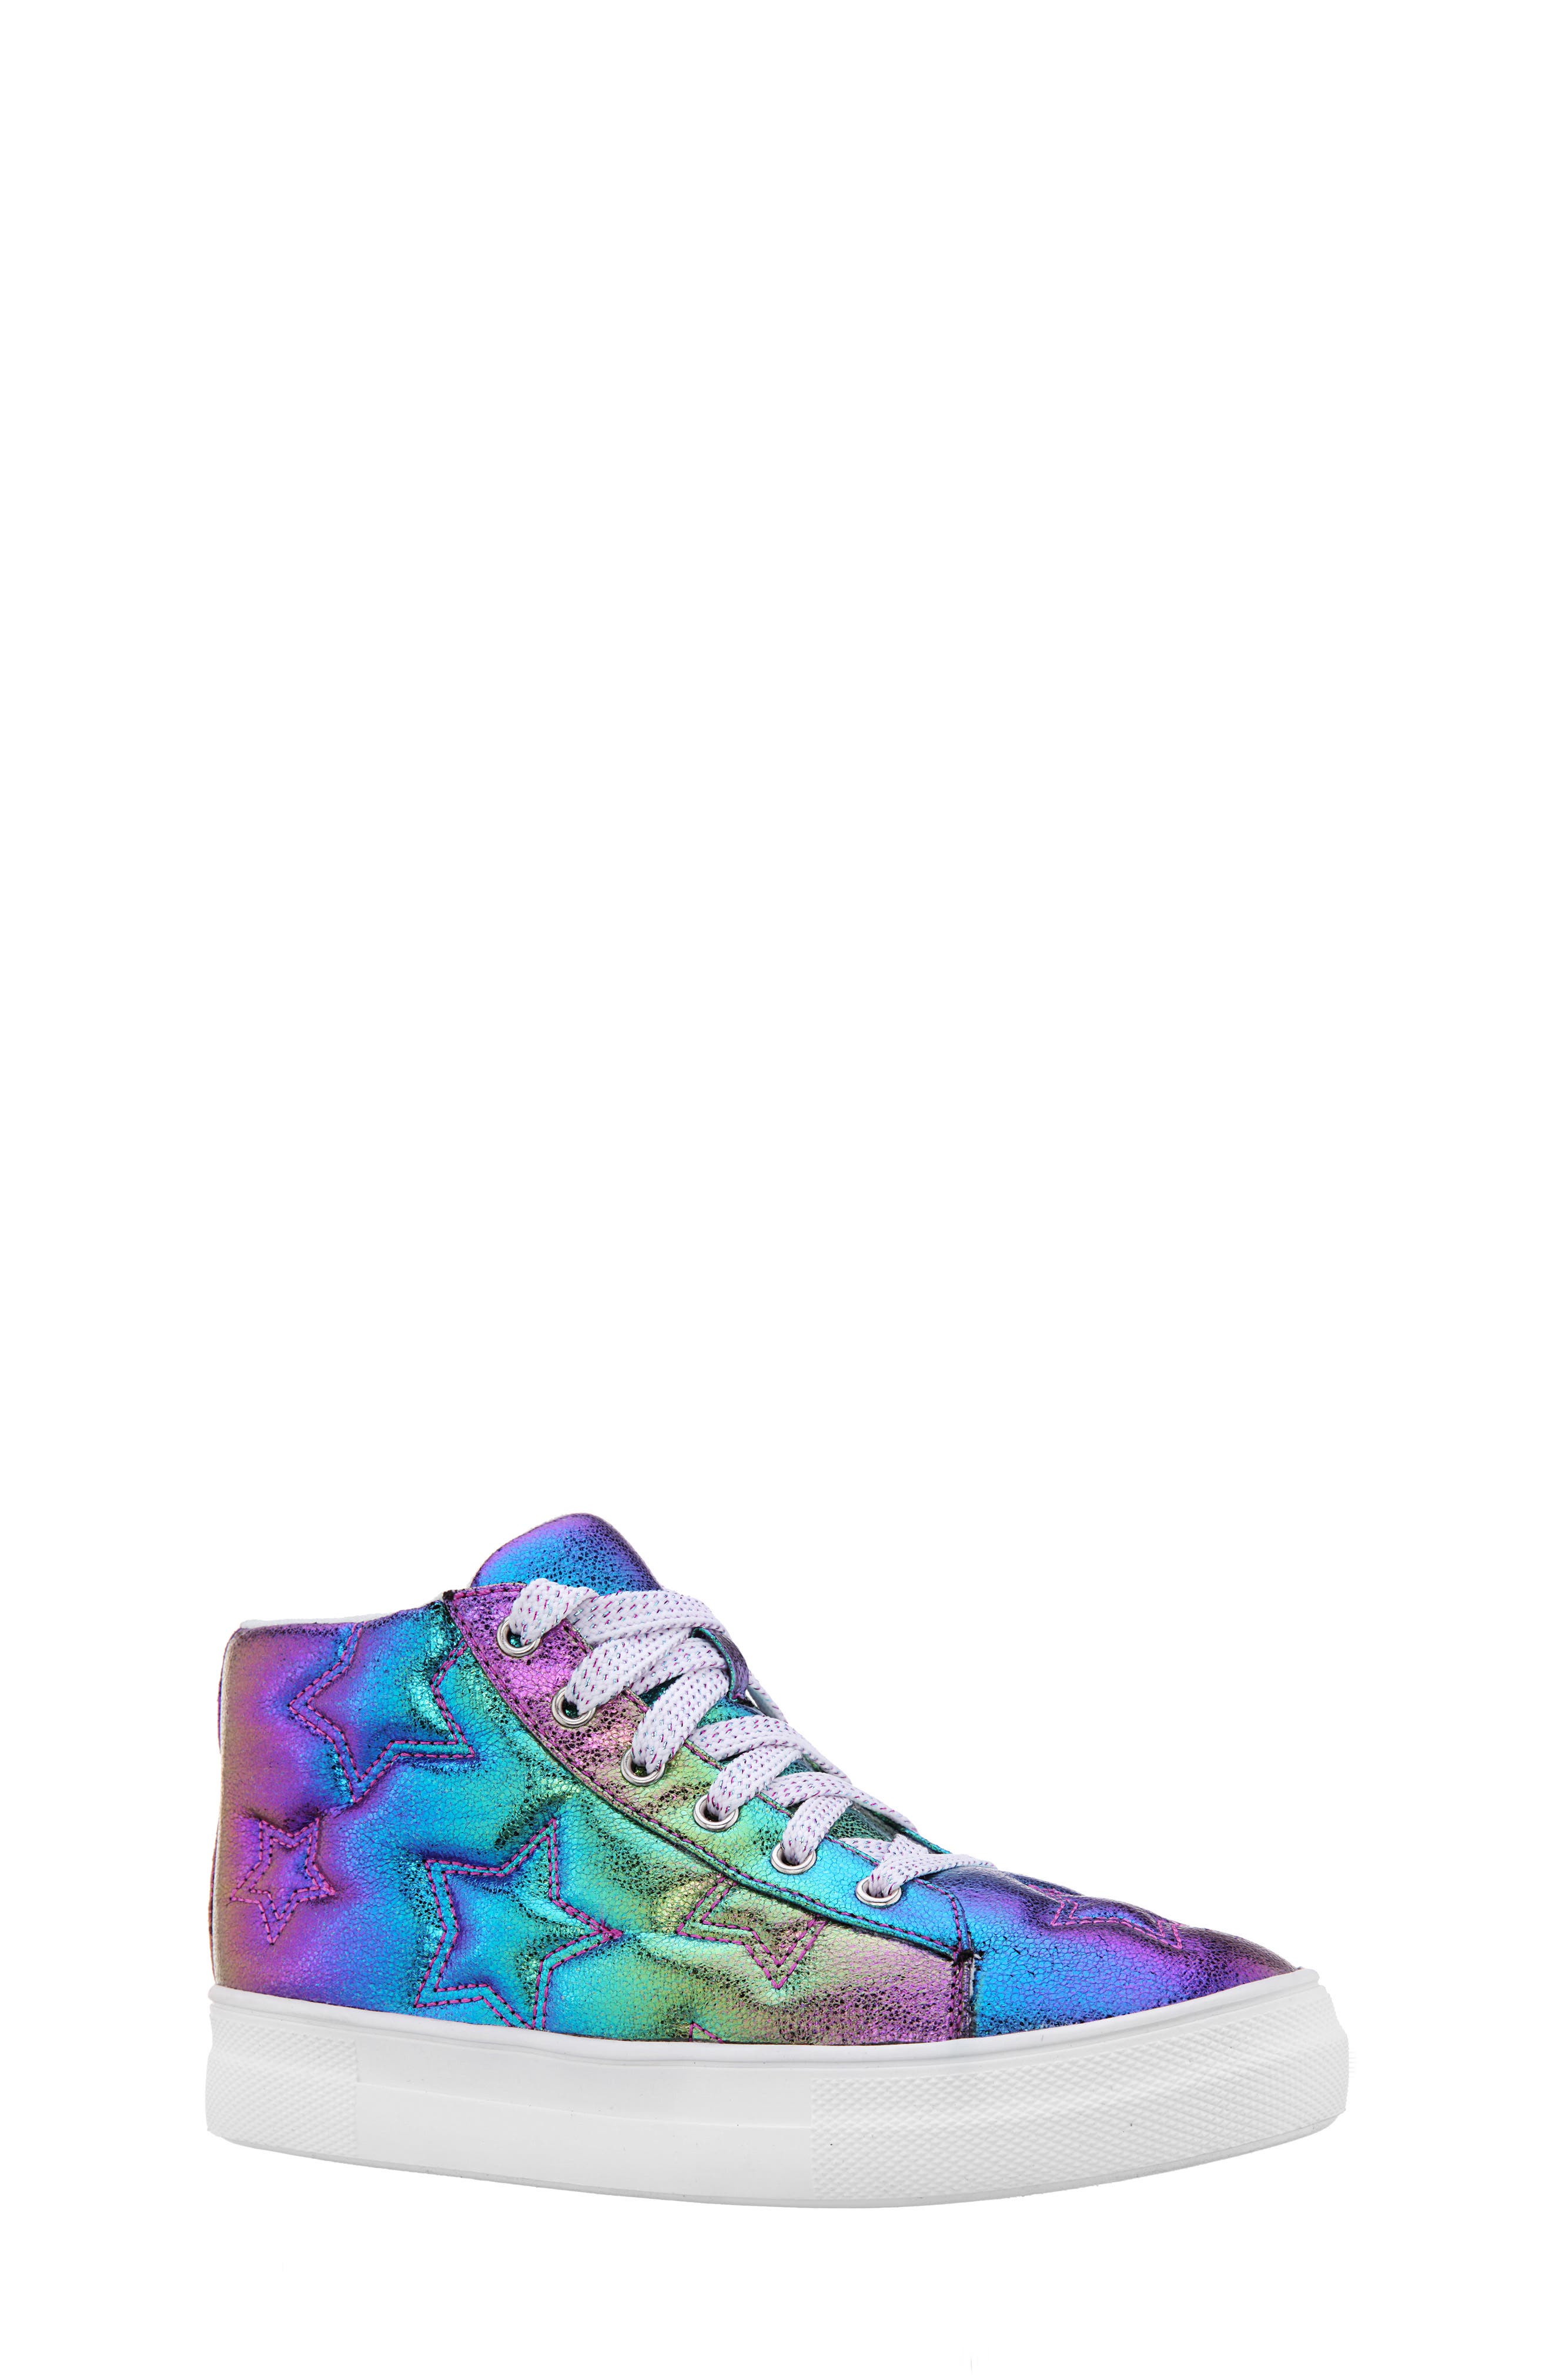 UPC 794378406525 product image for Girl's Nina Cherrish Metallic Sneaker, Size 2 M - Purple | upcitemdb.com